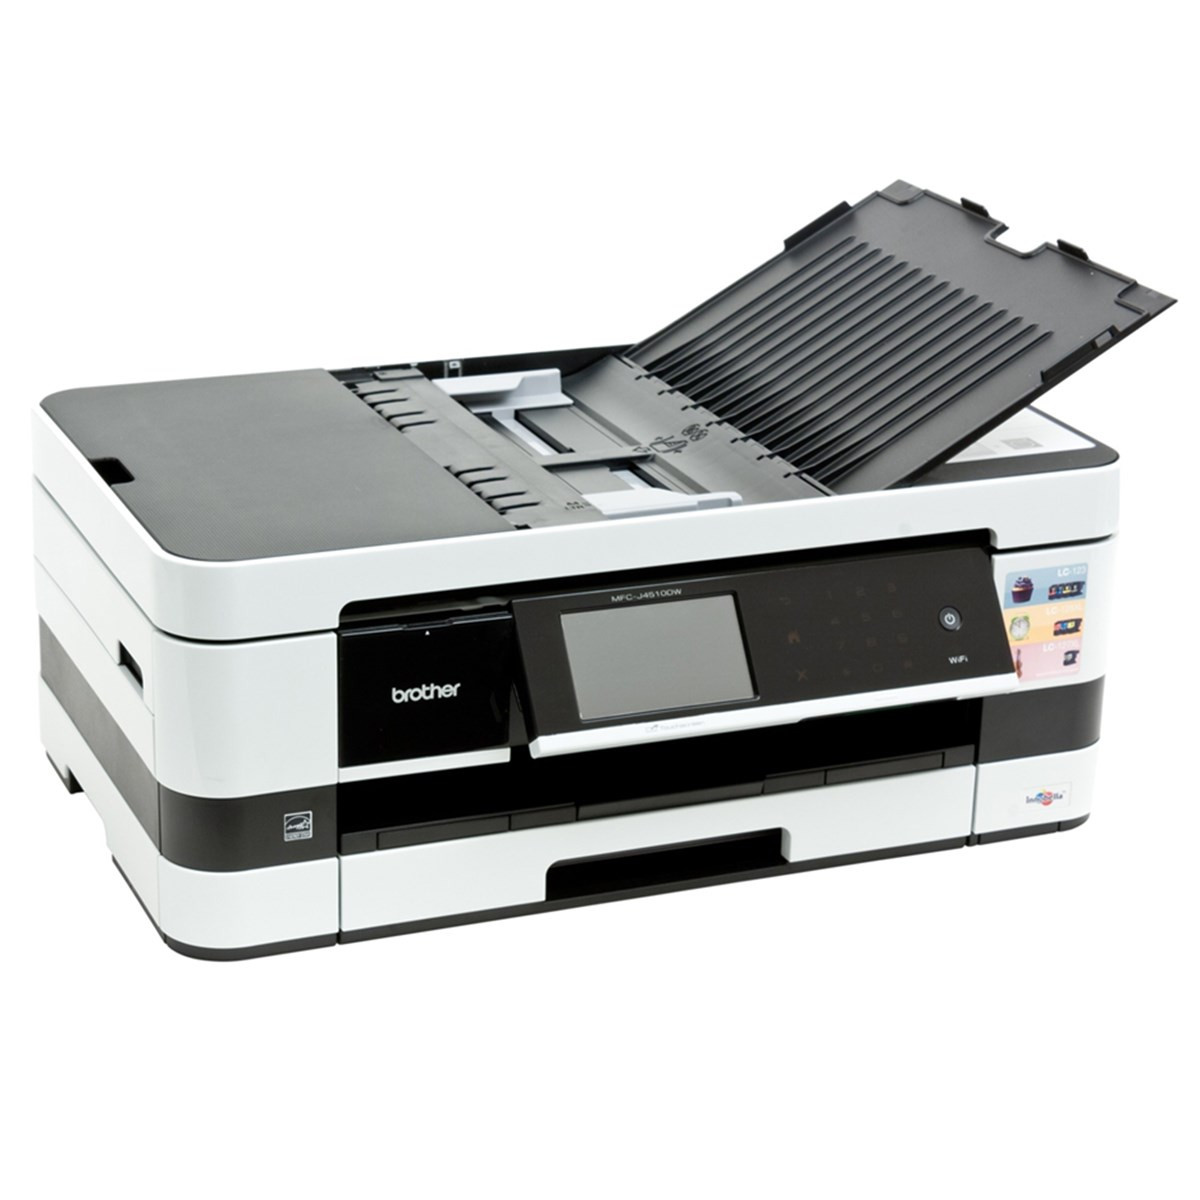 Impressora Brother MFC-J4510DW MFCJ4510 Multifuncional Jato de Tinta com Wireless e Duplex